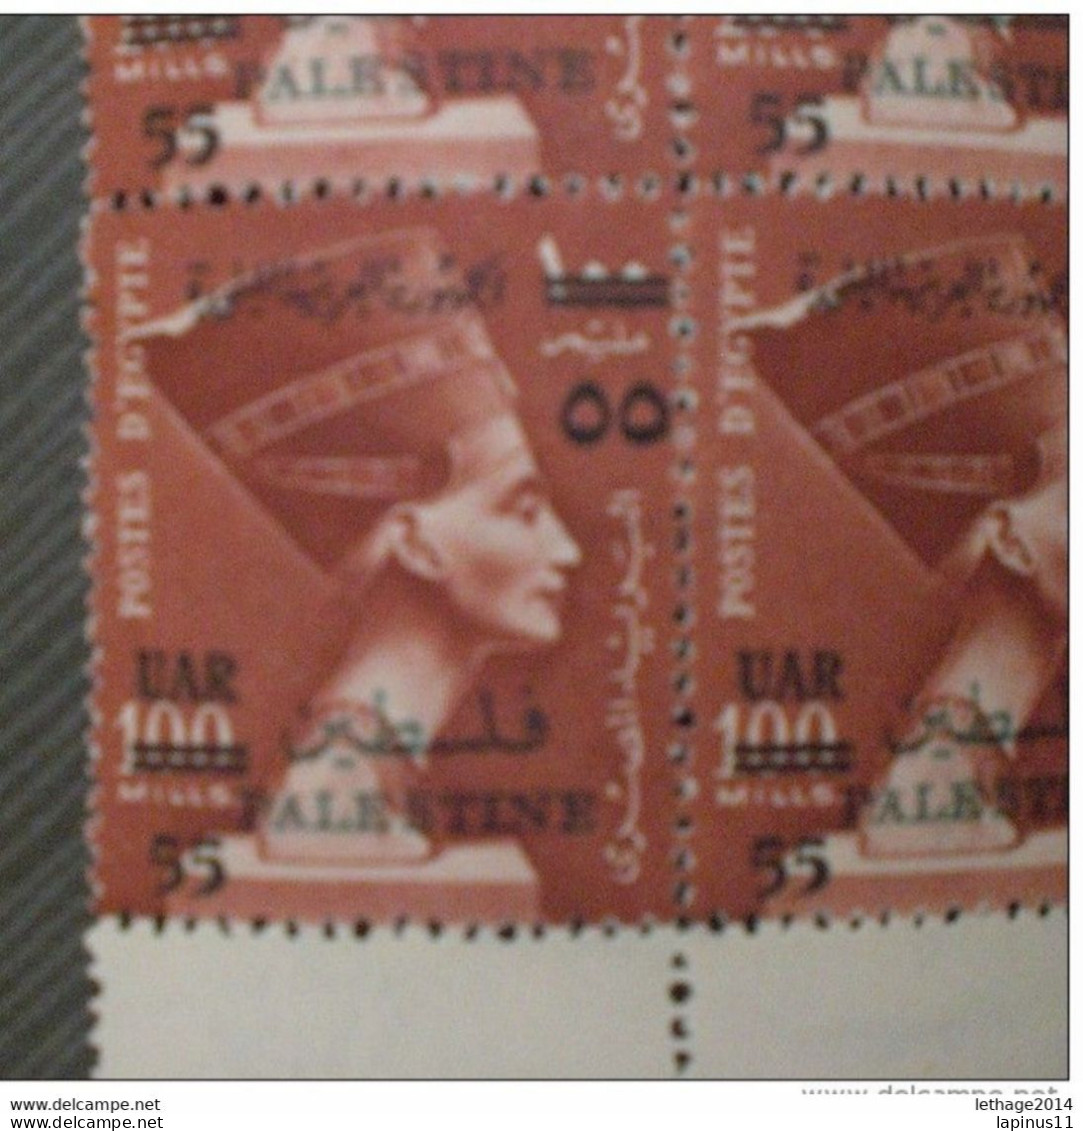 EGITTO EGYPT EGYPTE PALESTINE 1959 Queen Nefertiti UAR Postage Stamps Overprinted "PALESTINE" In English And Arabic MNH - Ongebruikt